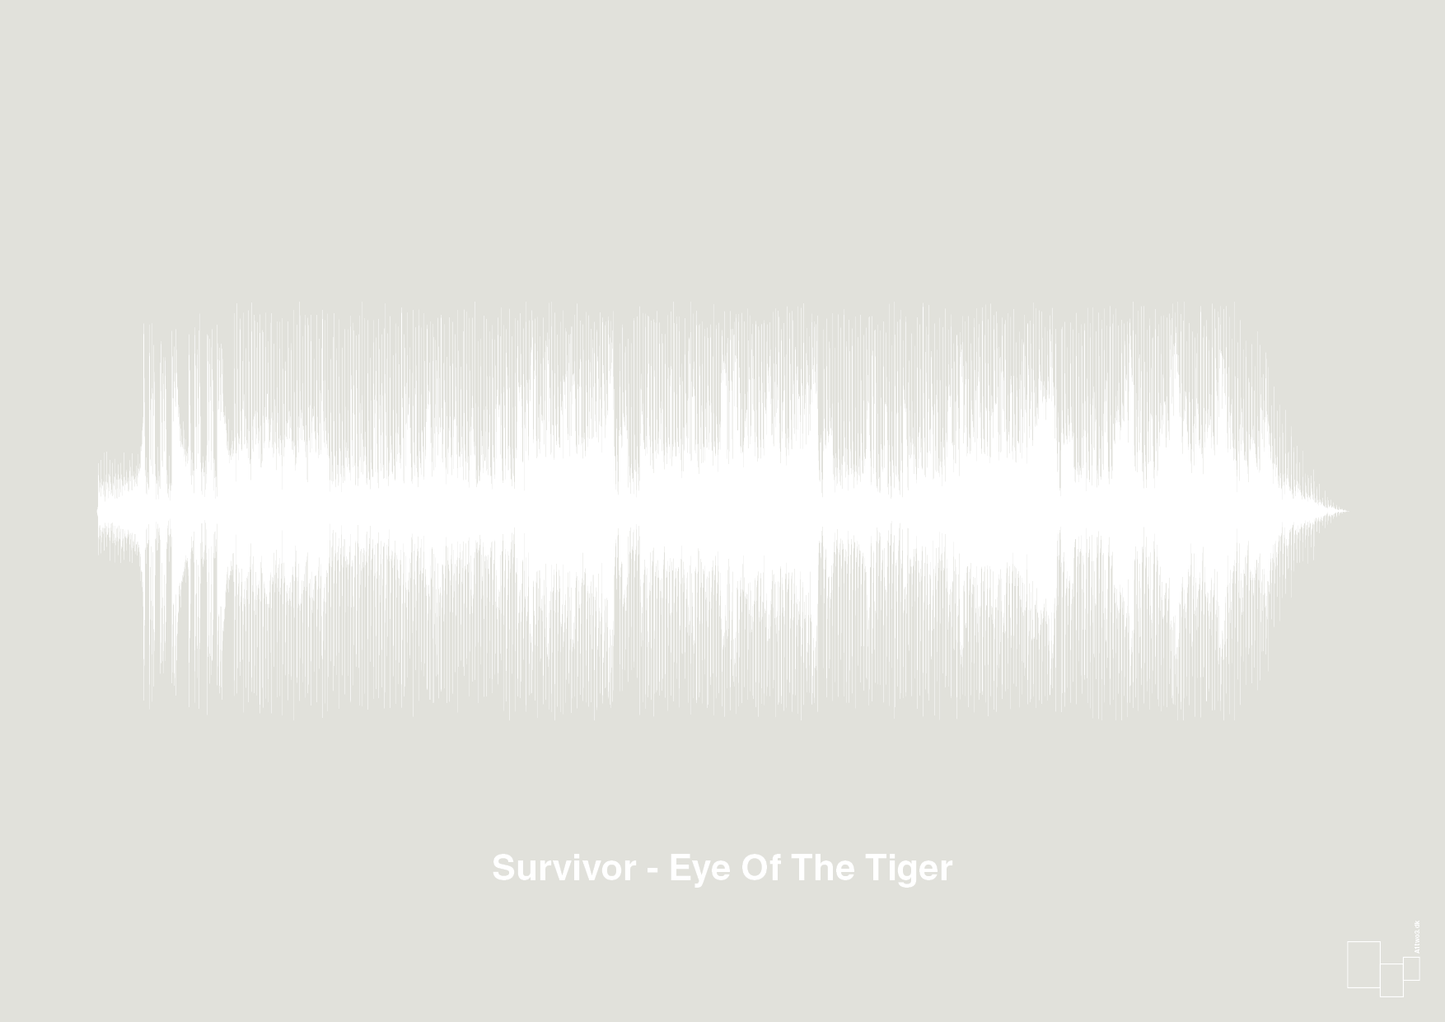 survivor - eye of the tiger - Plakat med Musik i Painters White